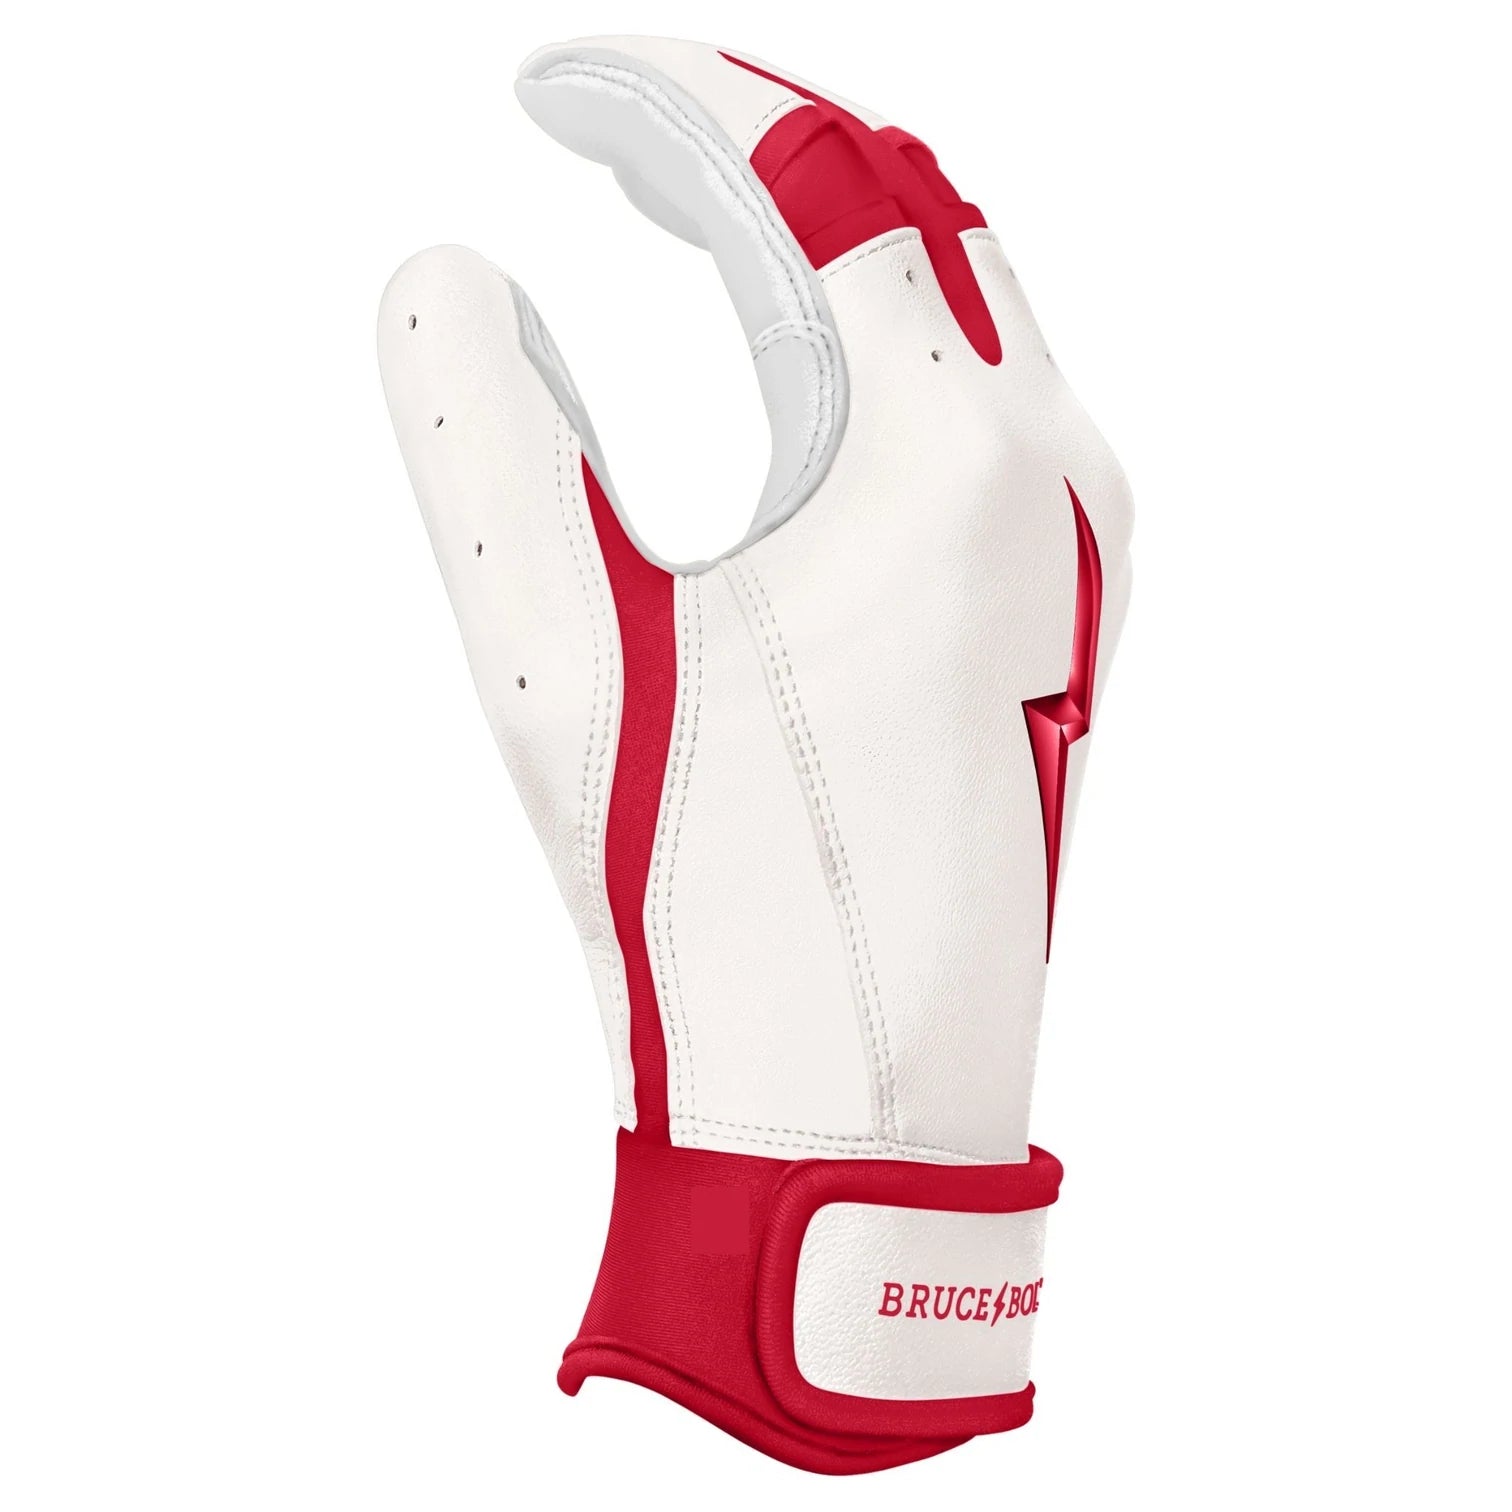 Bruce Bolt - BADER Series Adult Short Cuff Batting Gloves | BADER WHITE